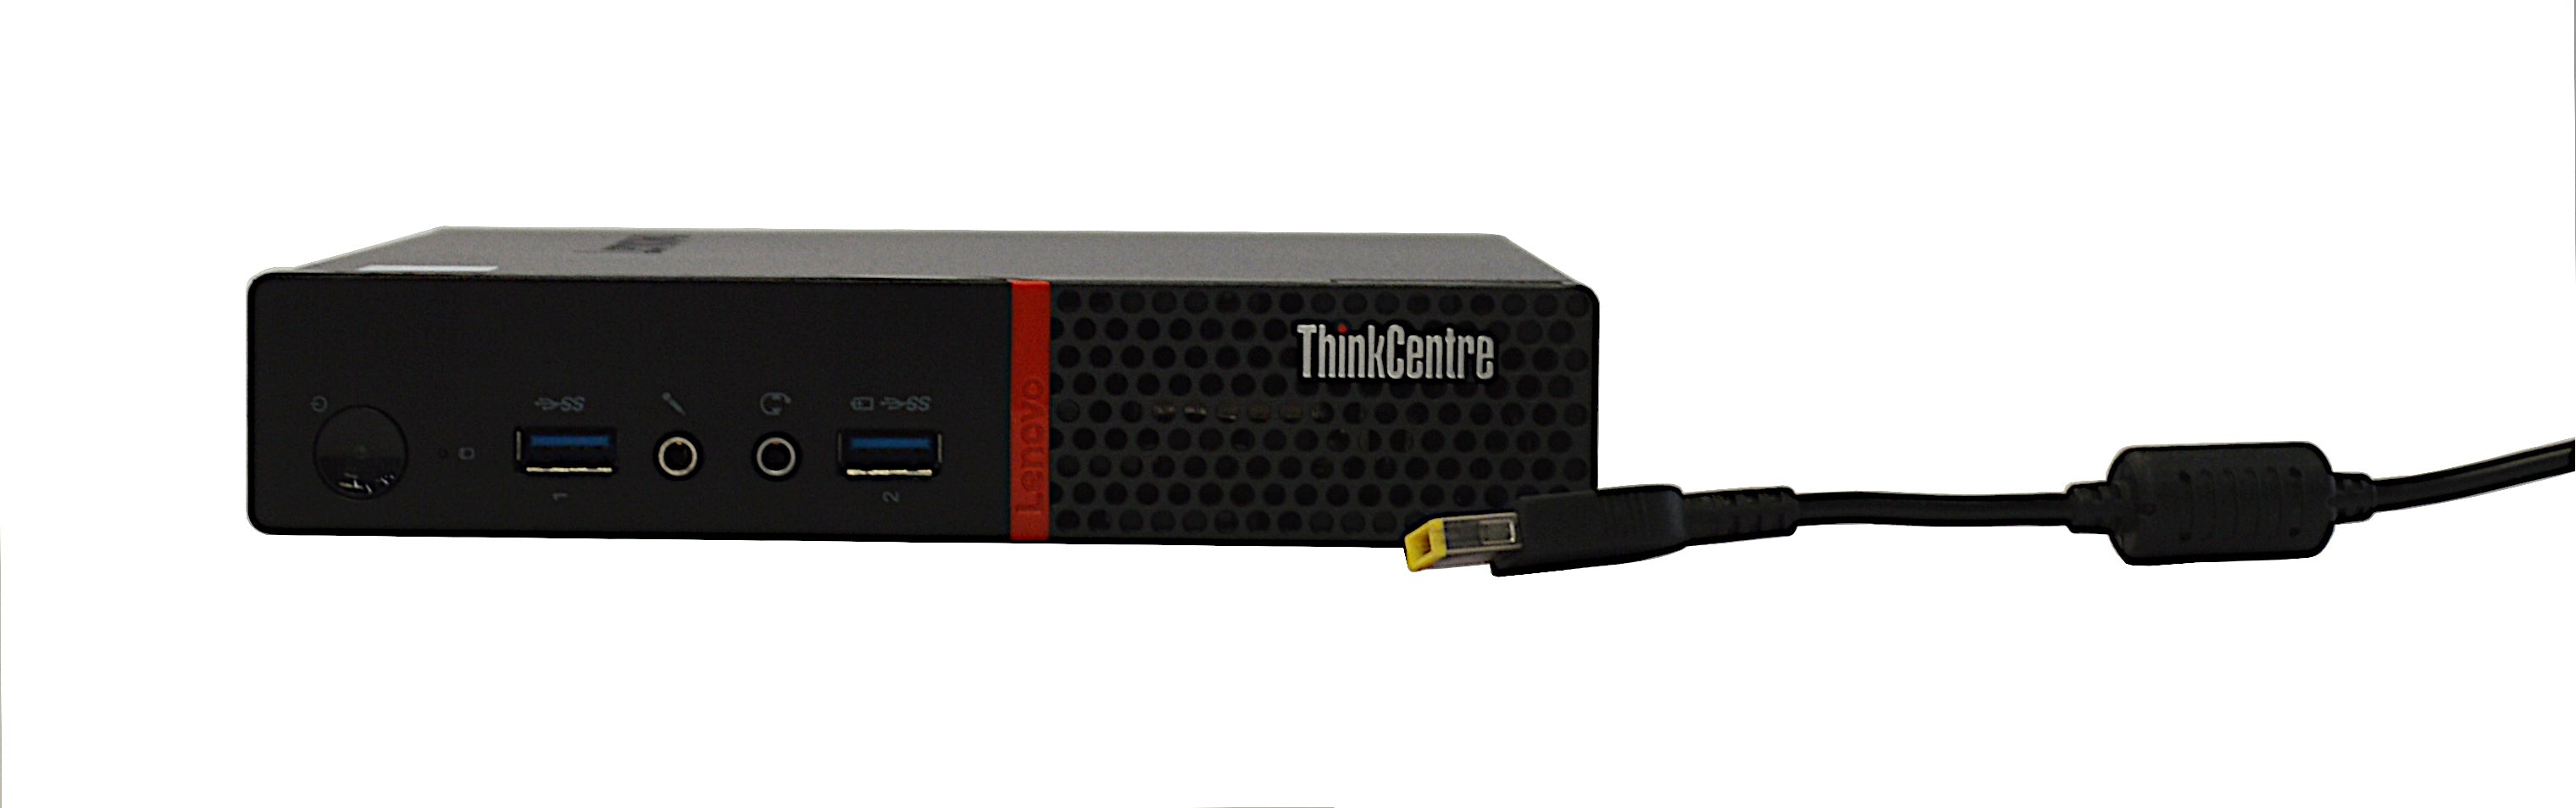 Lenovo ThinkCentre M900 Micro, Intel Pentium, 32GB RAM, 512GB SSD